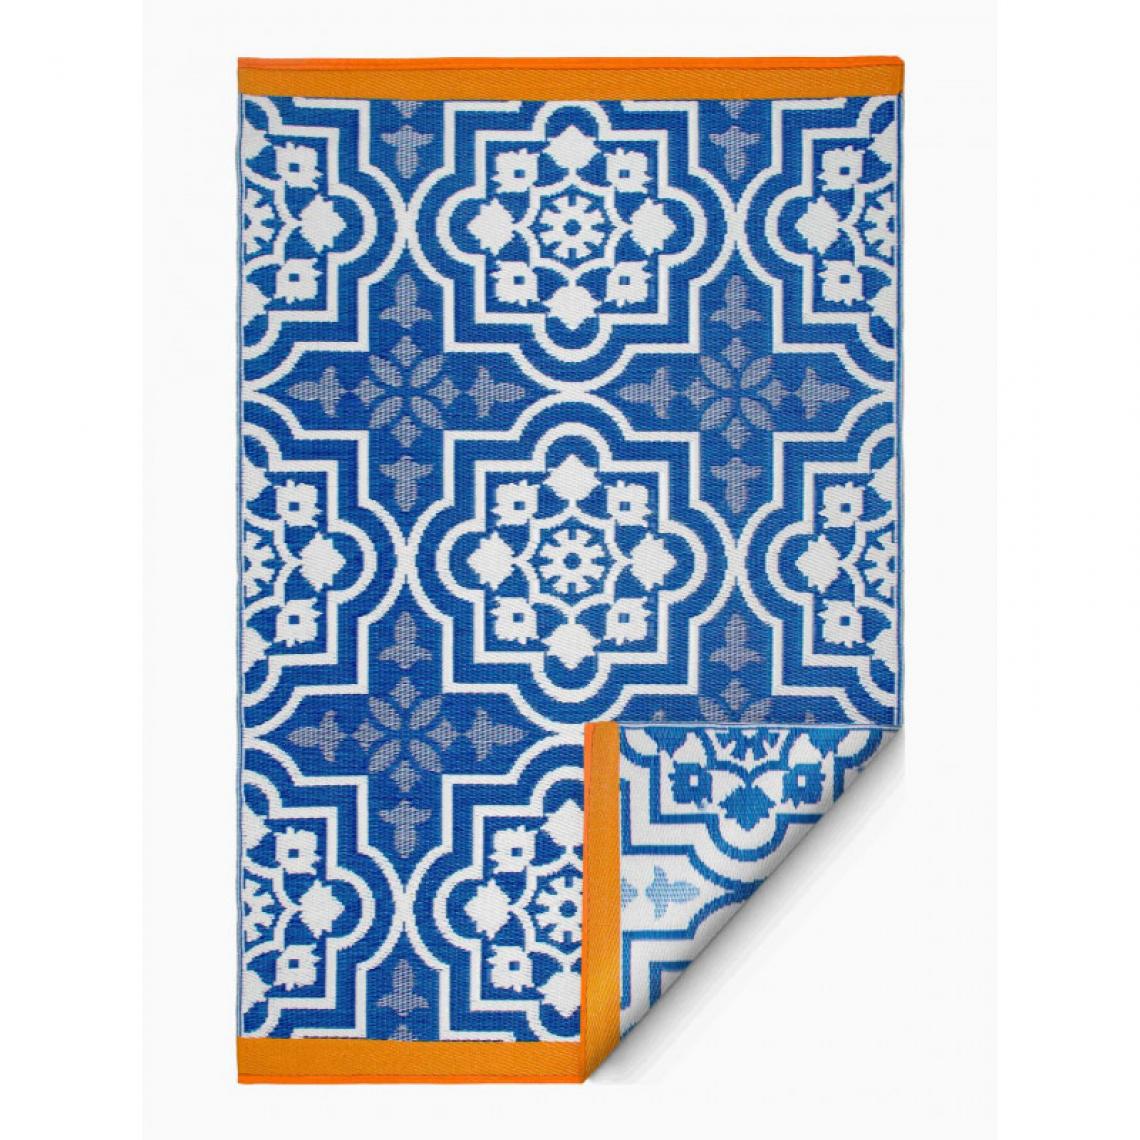 Ac-Deco - Tapis Puebla - L 180 x l 270 cm - Bleu et orange - Tapis